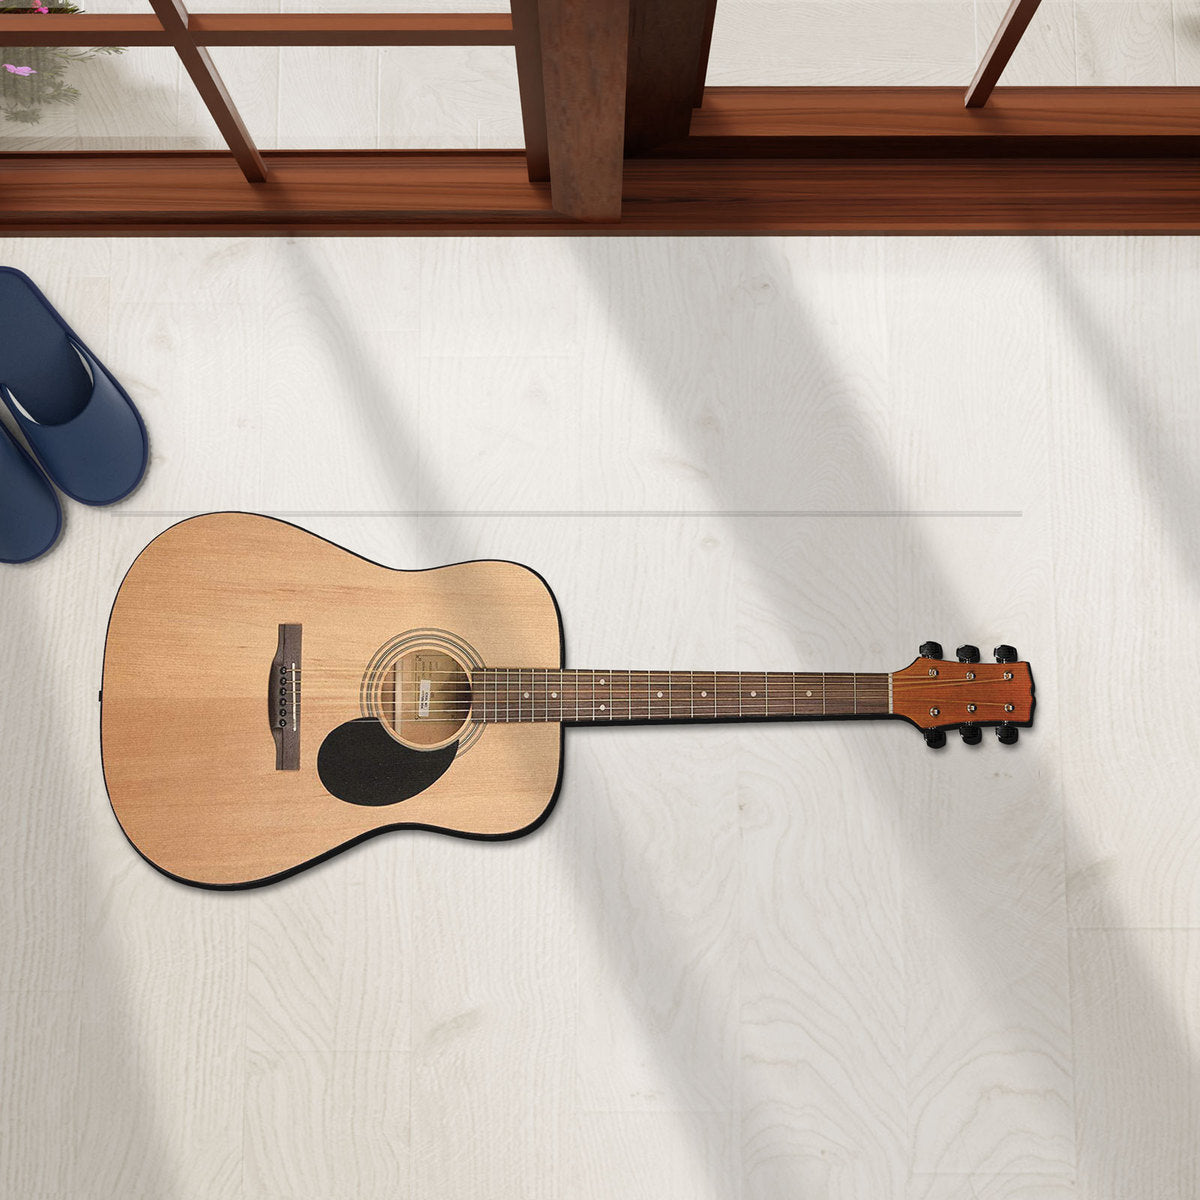 Acoustic Guitar Shaped Mat